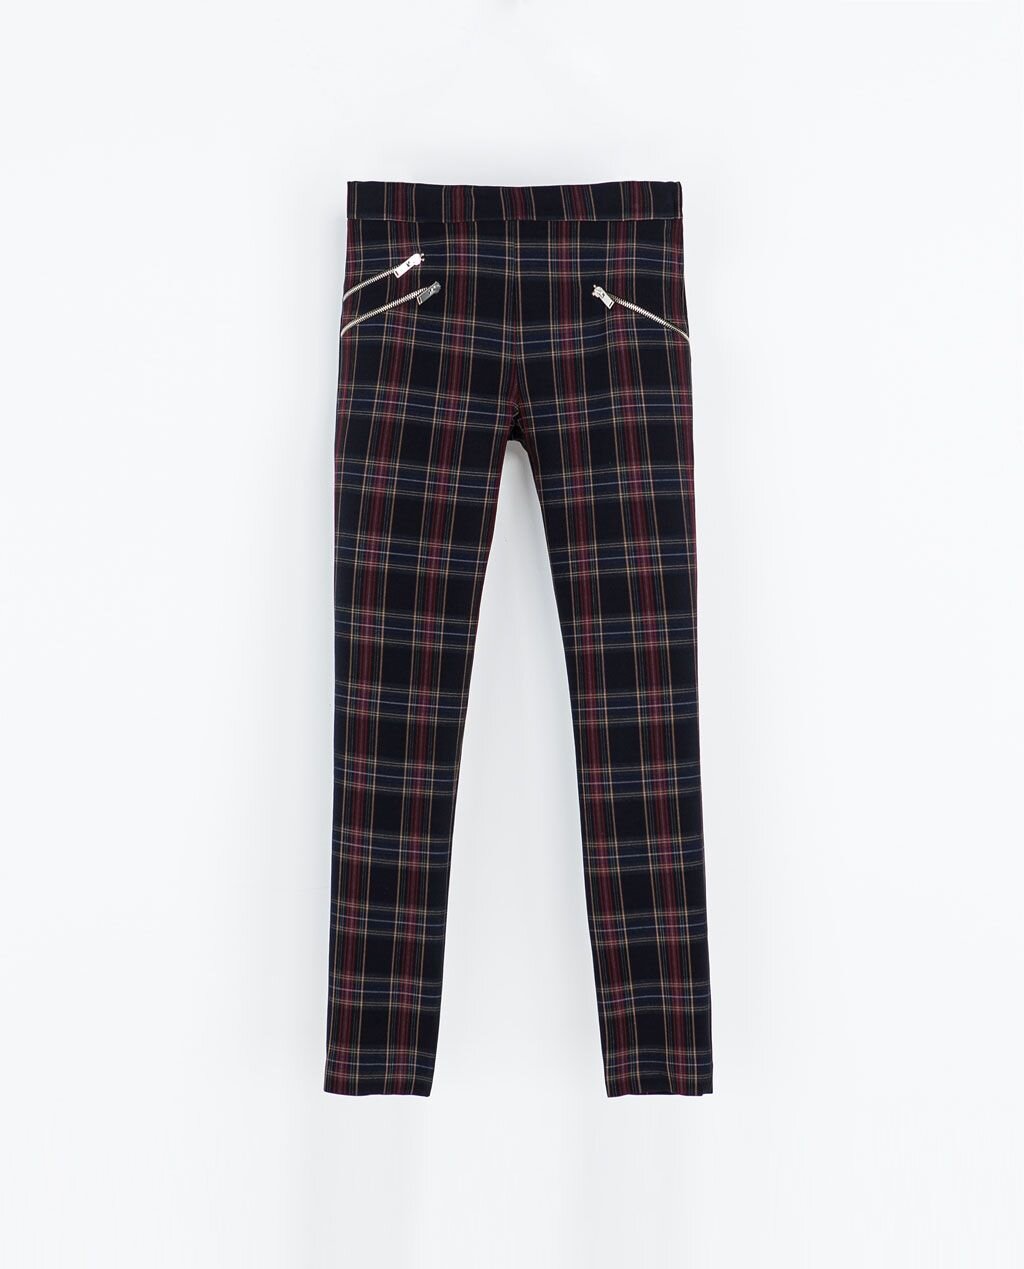 Zara Checkered Skinny Trousers with Zips.jpeg